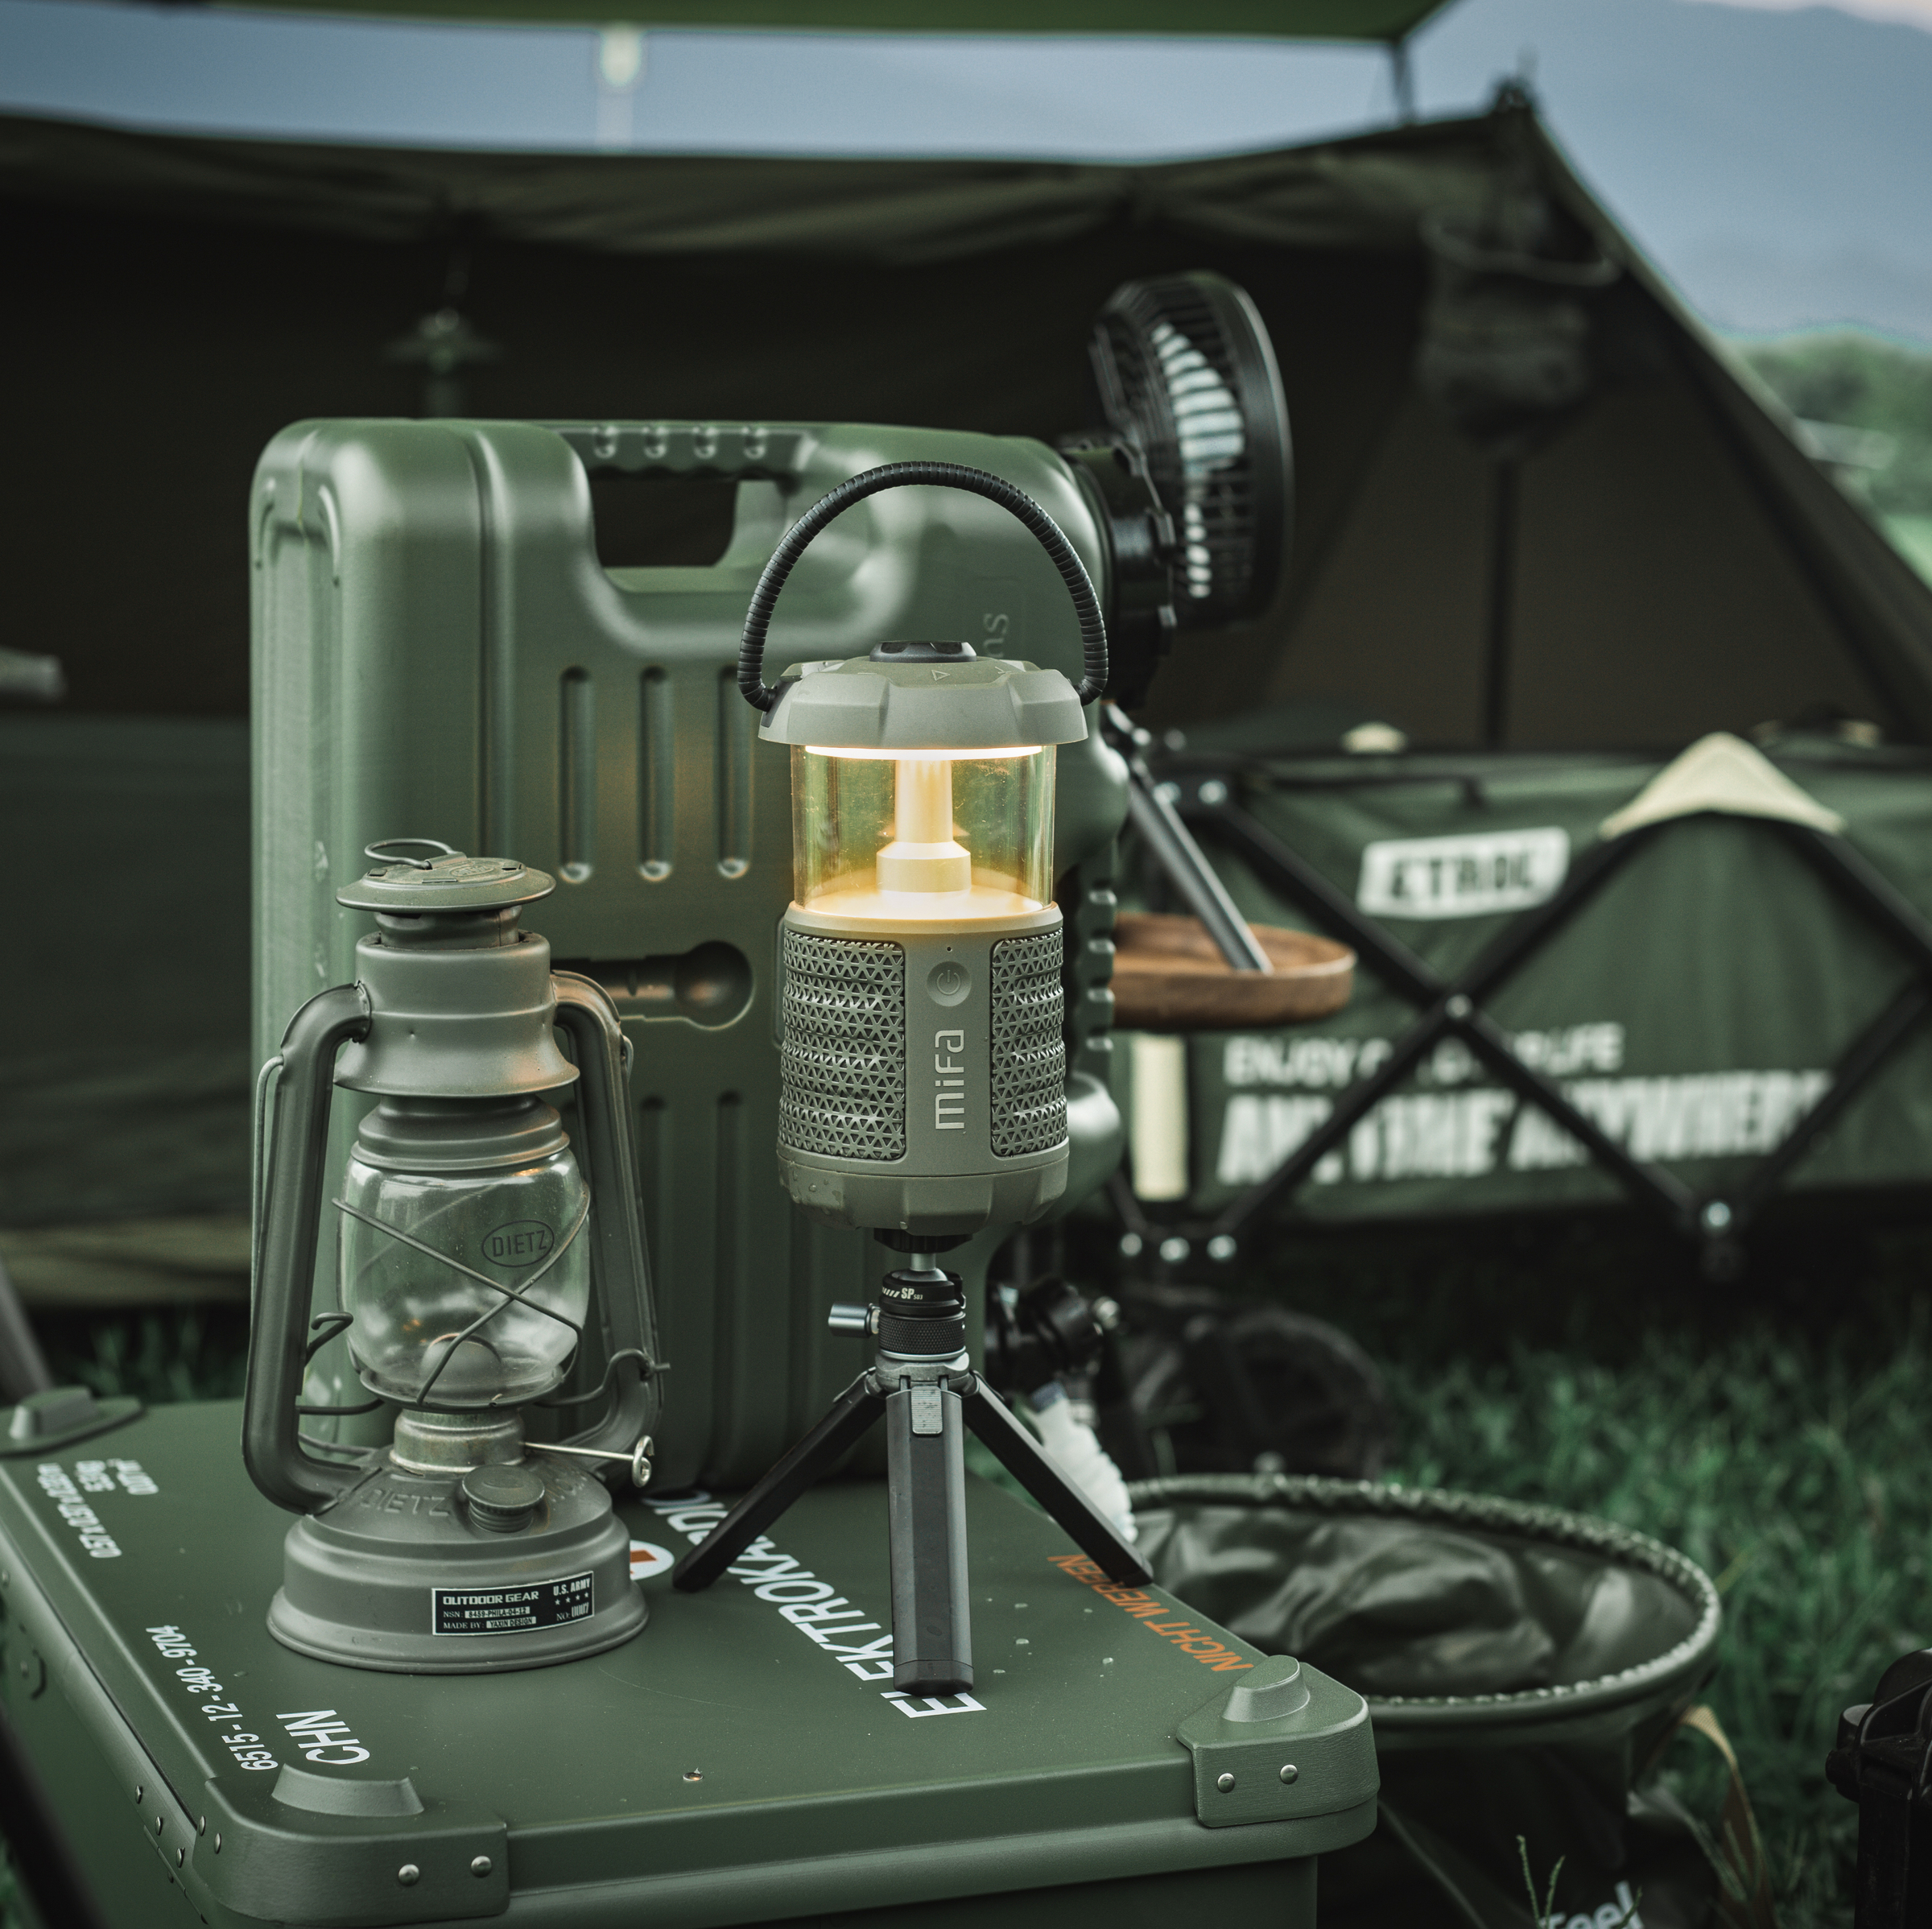 MIFA Wild Camping Lamp Bluetooth Speaker / waterproof outdoor